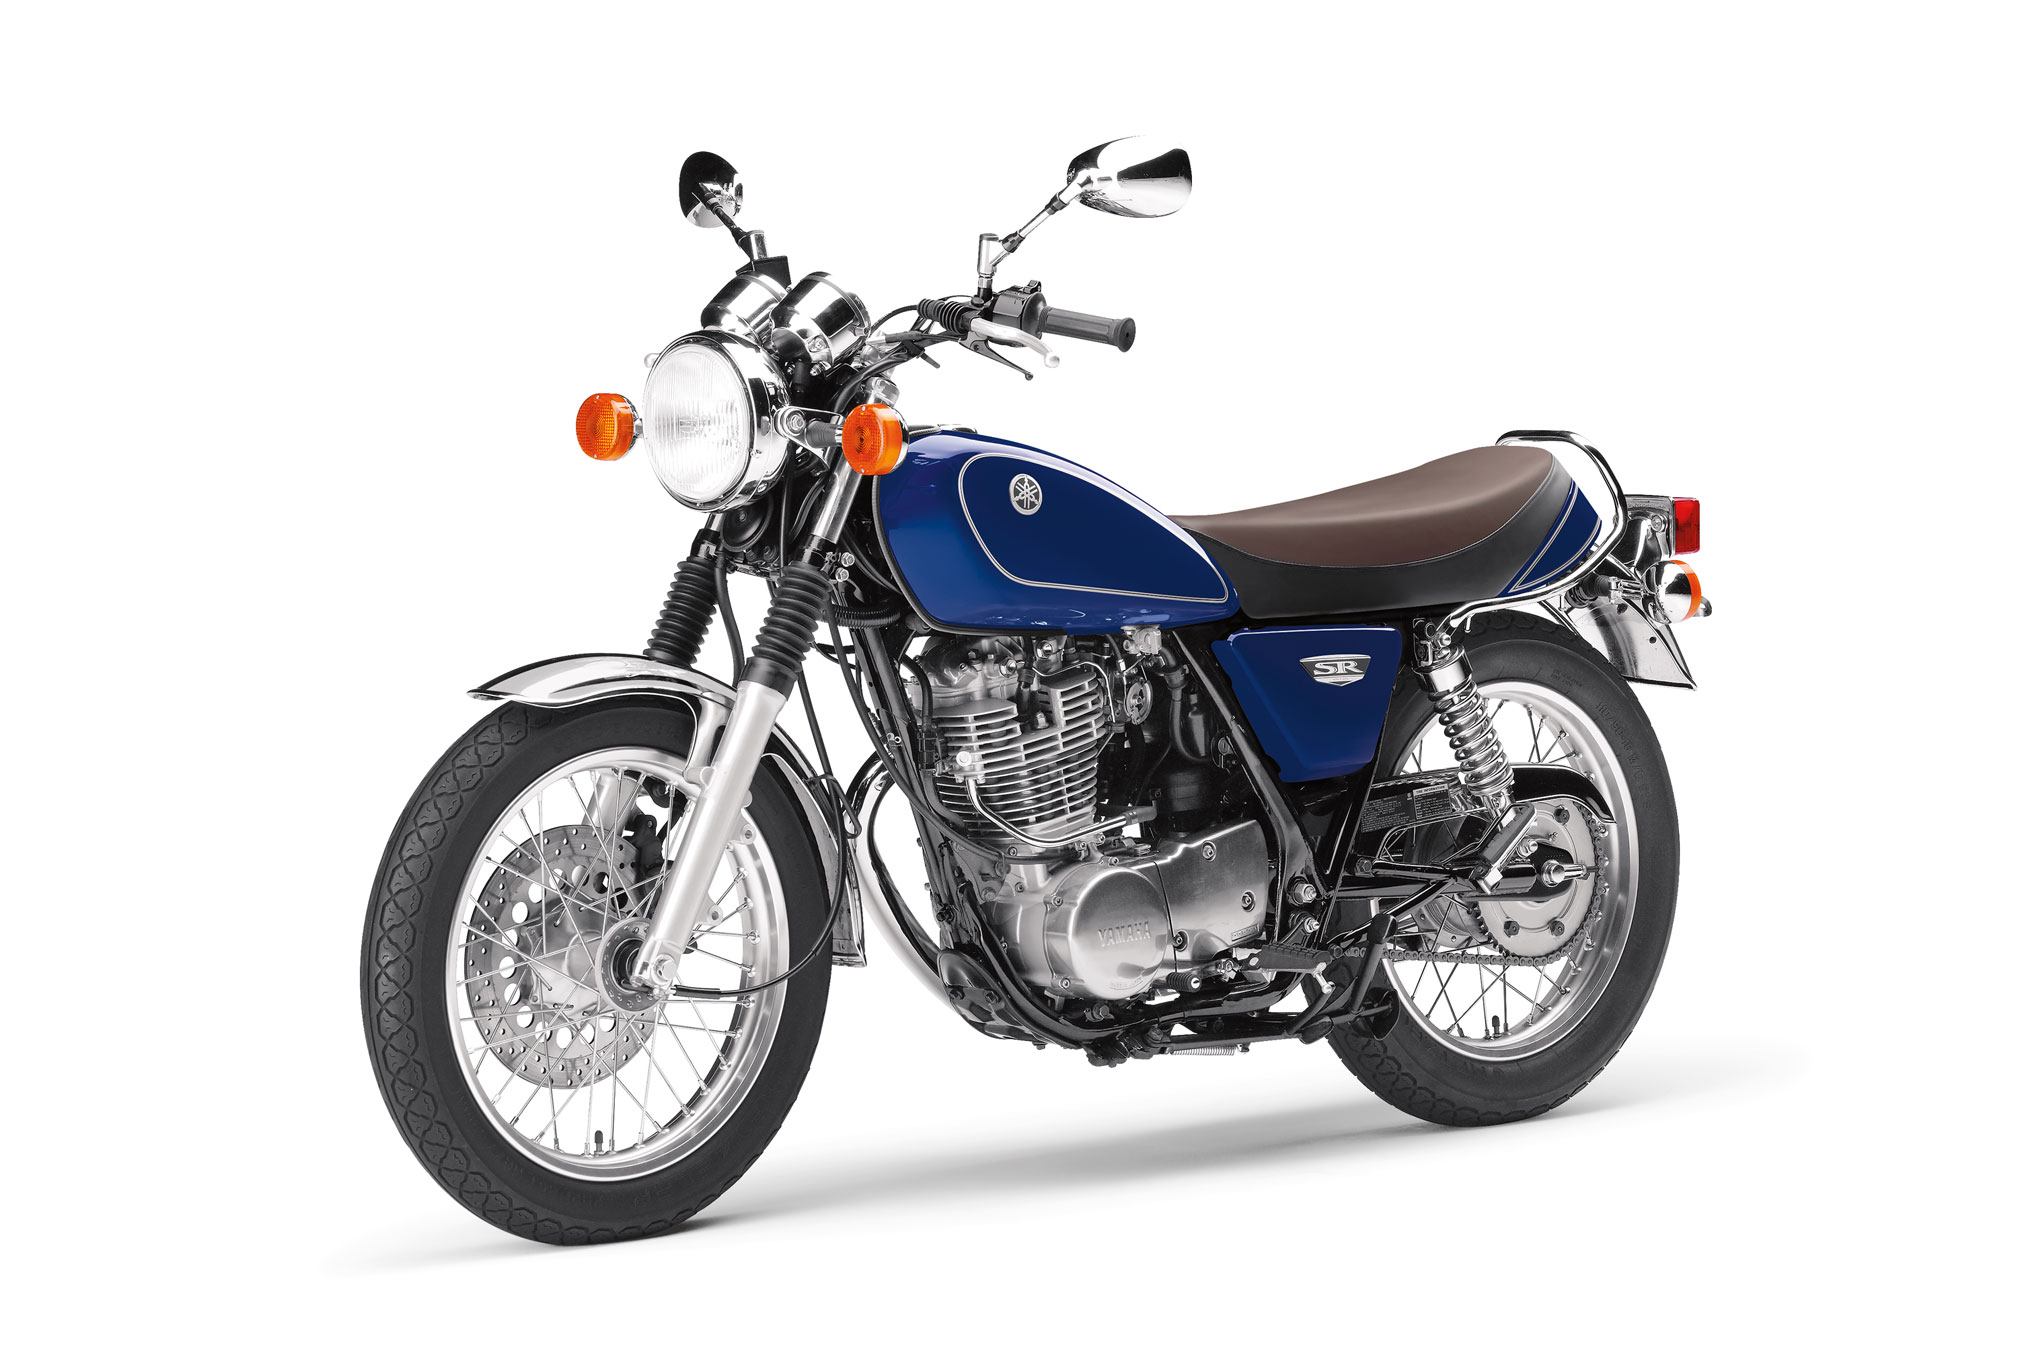 2018 Yamaha SR400 Review • Total Motorcycle